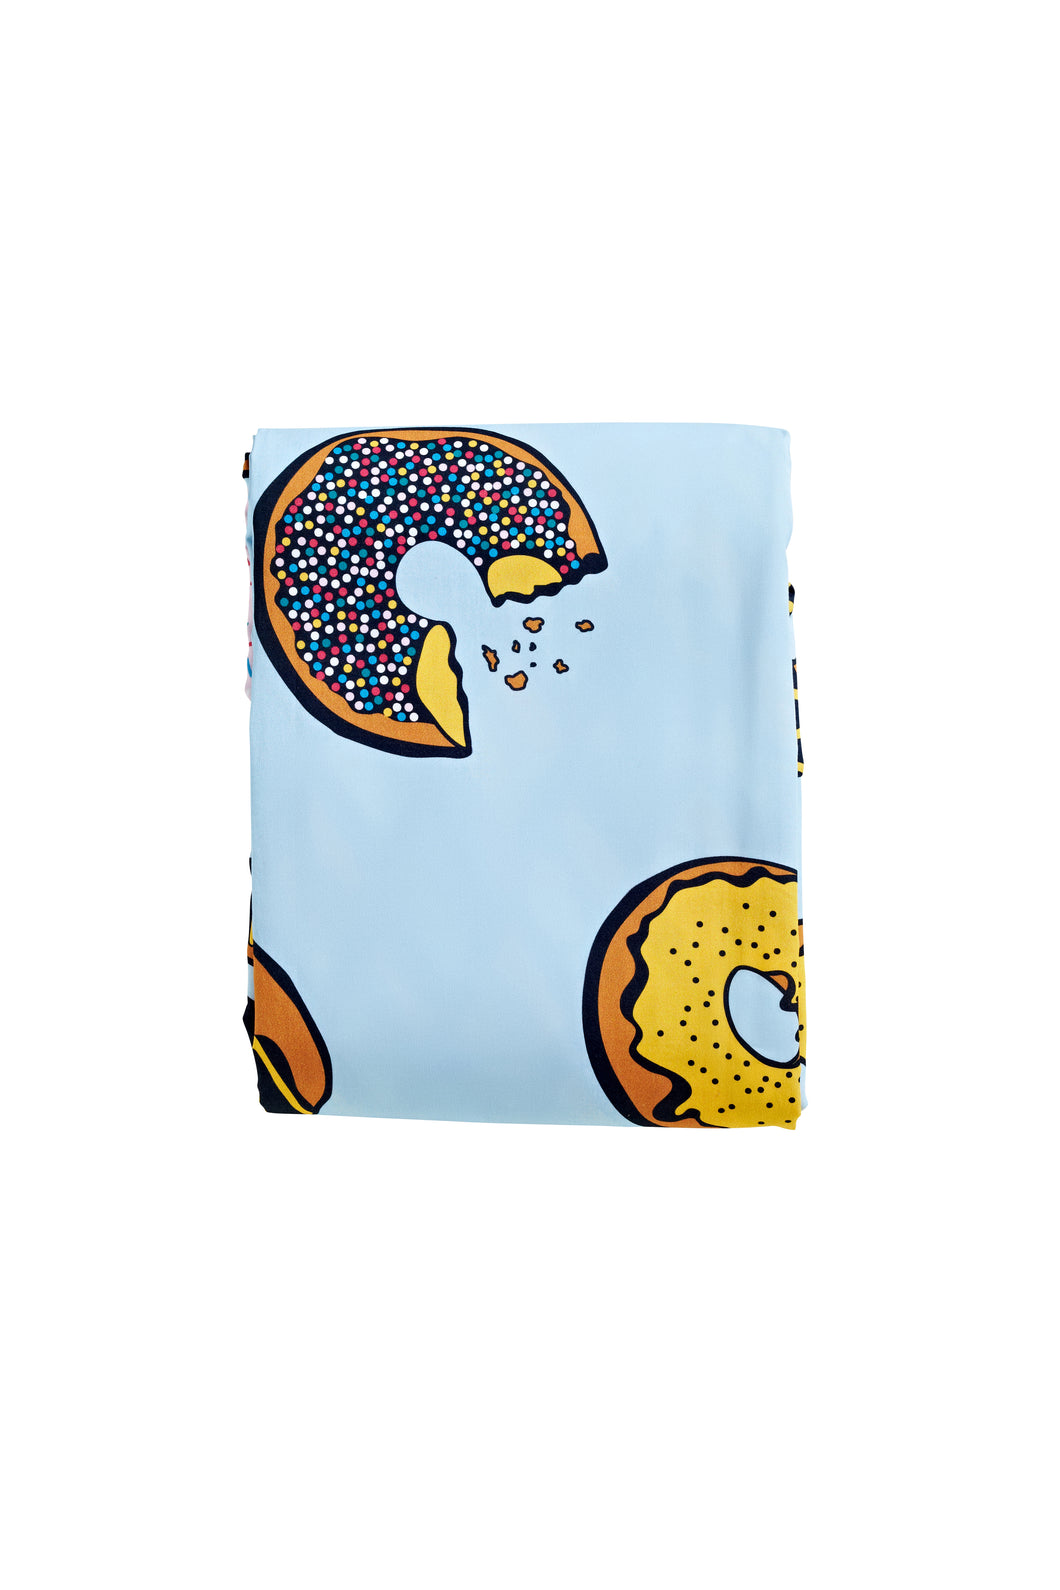 Krispy Dreme Donut Fitted Sheet, Single - Sack Me!